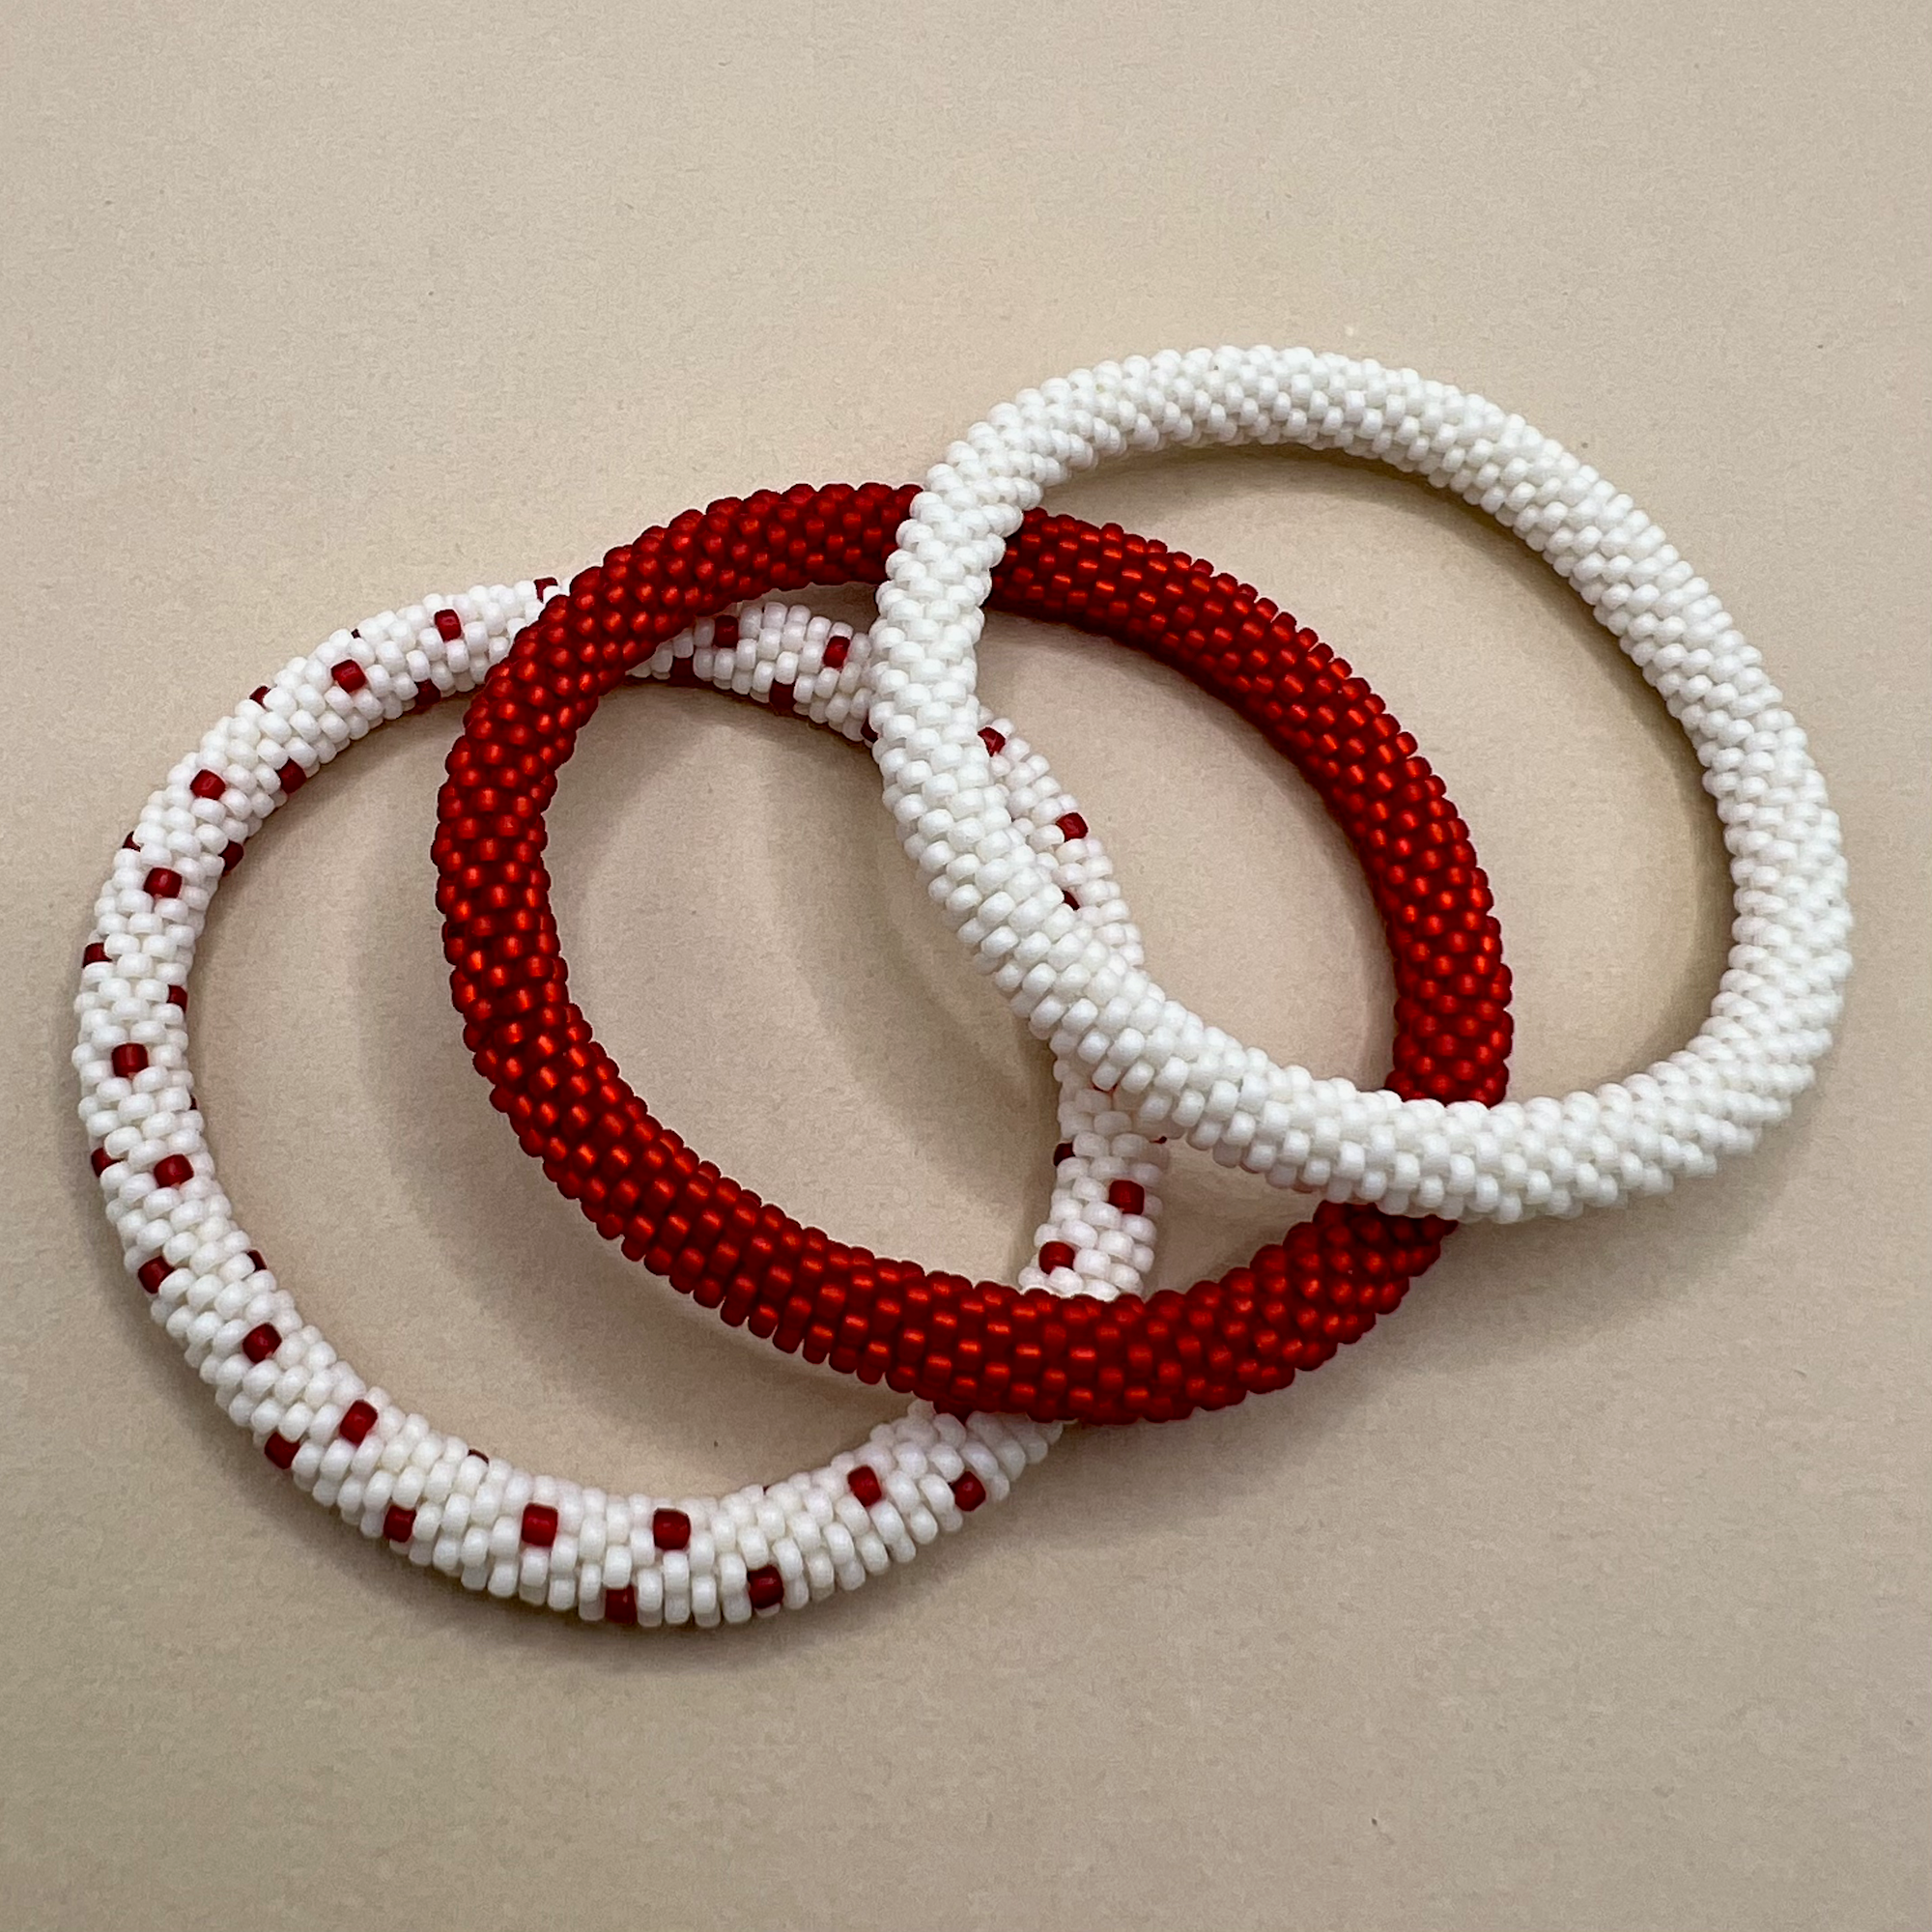 Red & Cream Beaded Bangle - Size 11 Beads